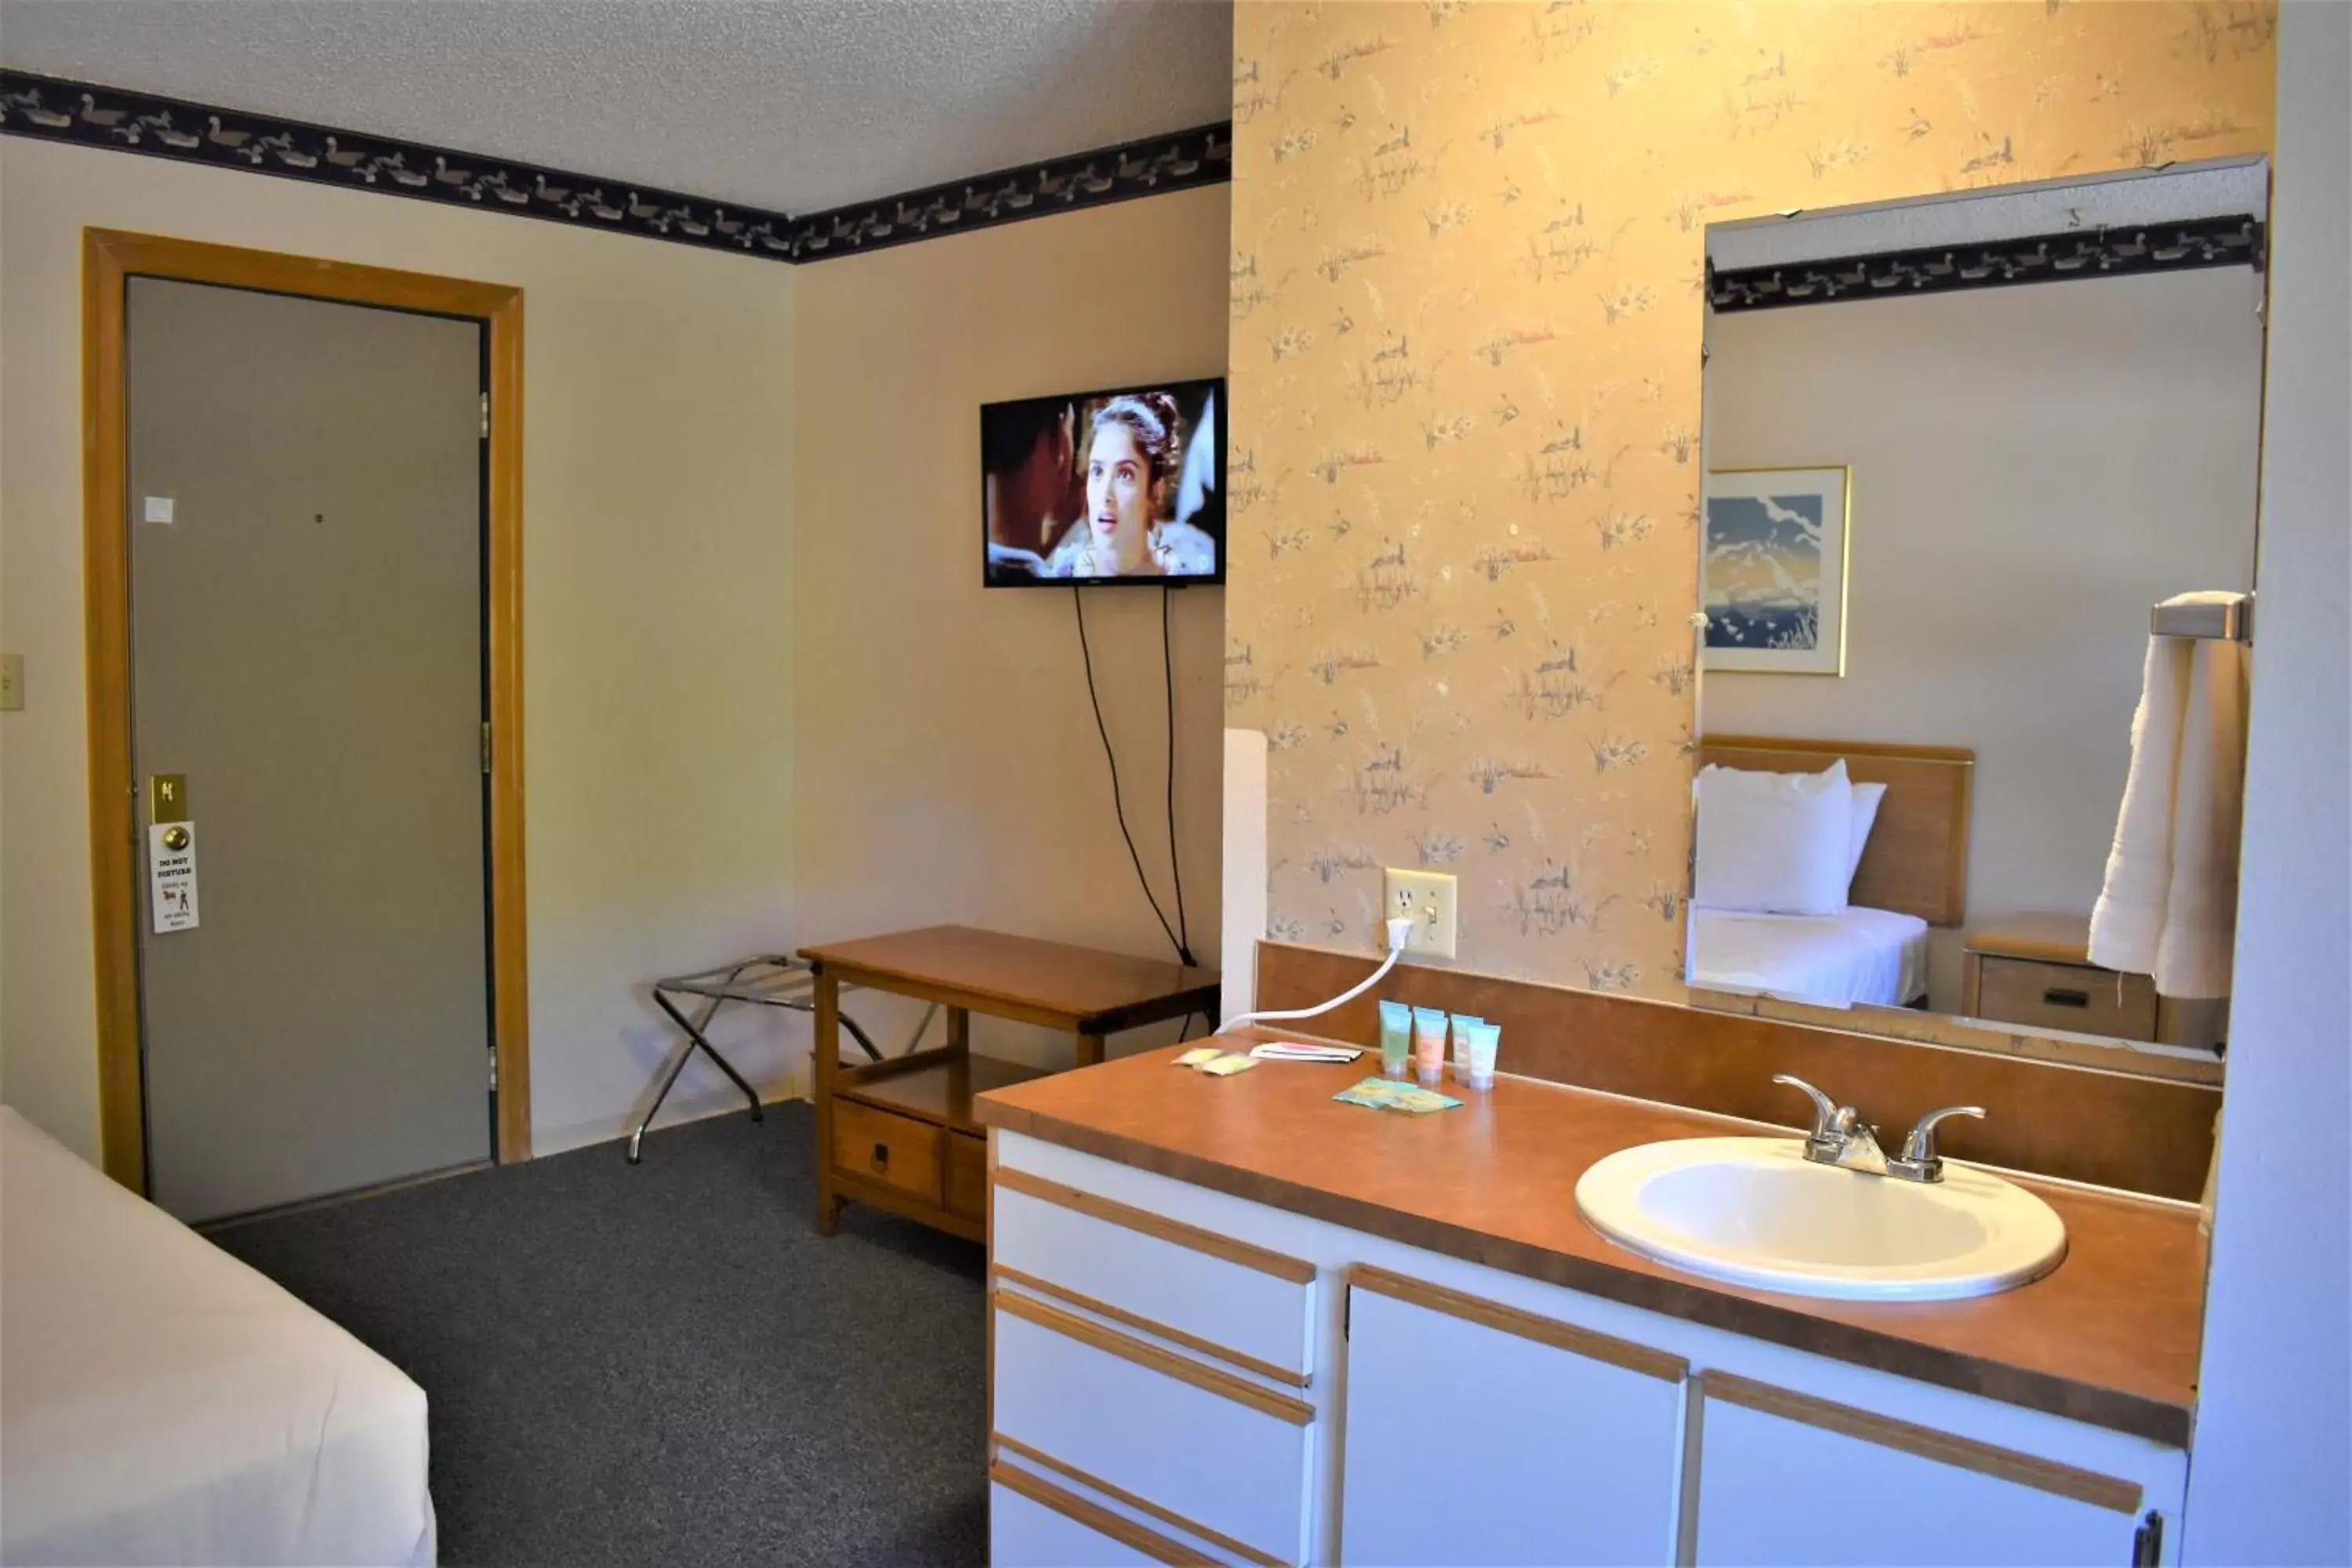 TV and multimedia, Bathroom in Winthrop Inn